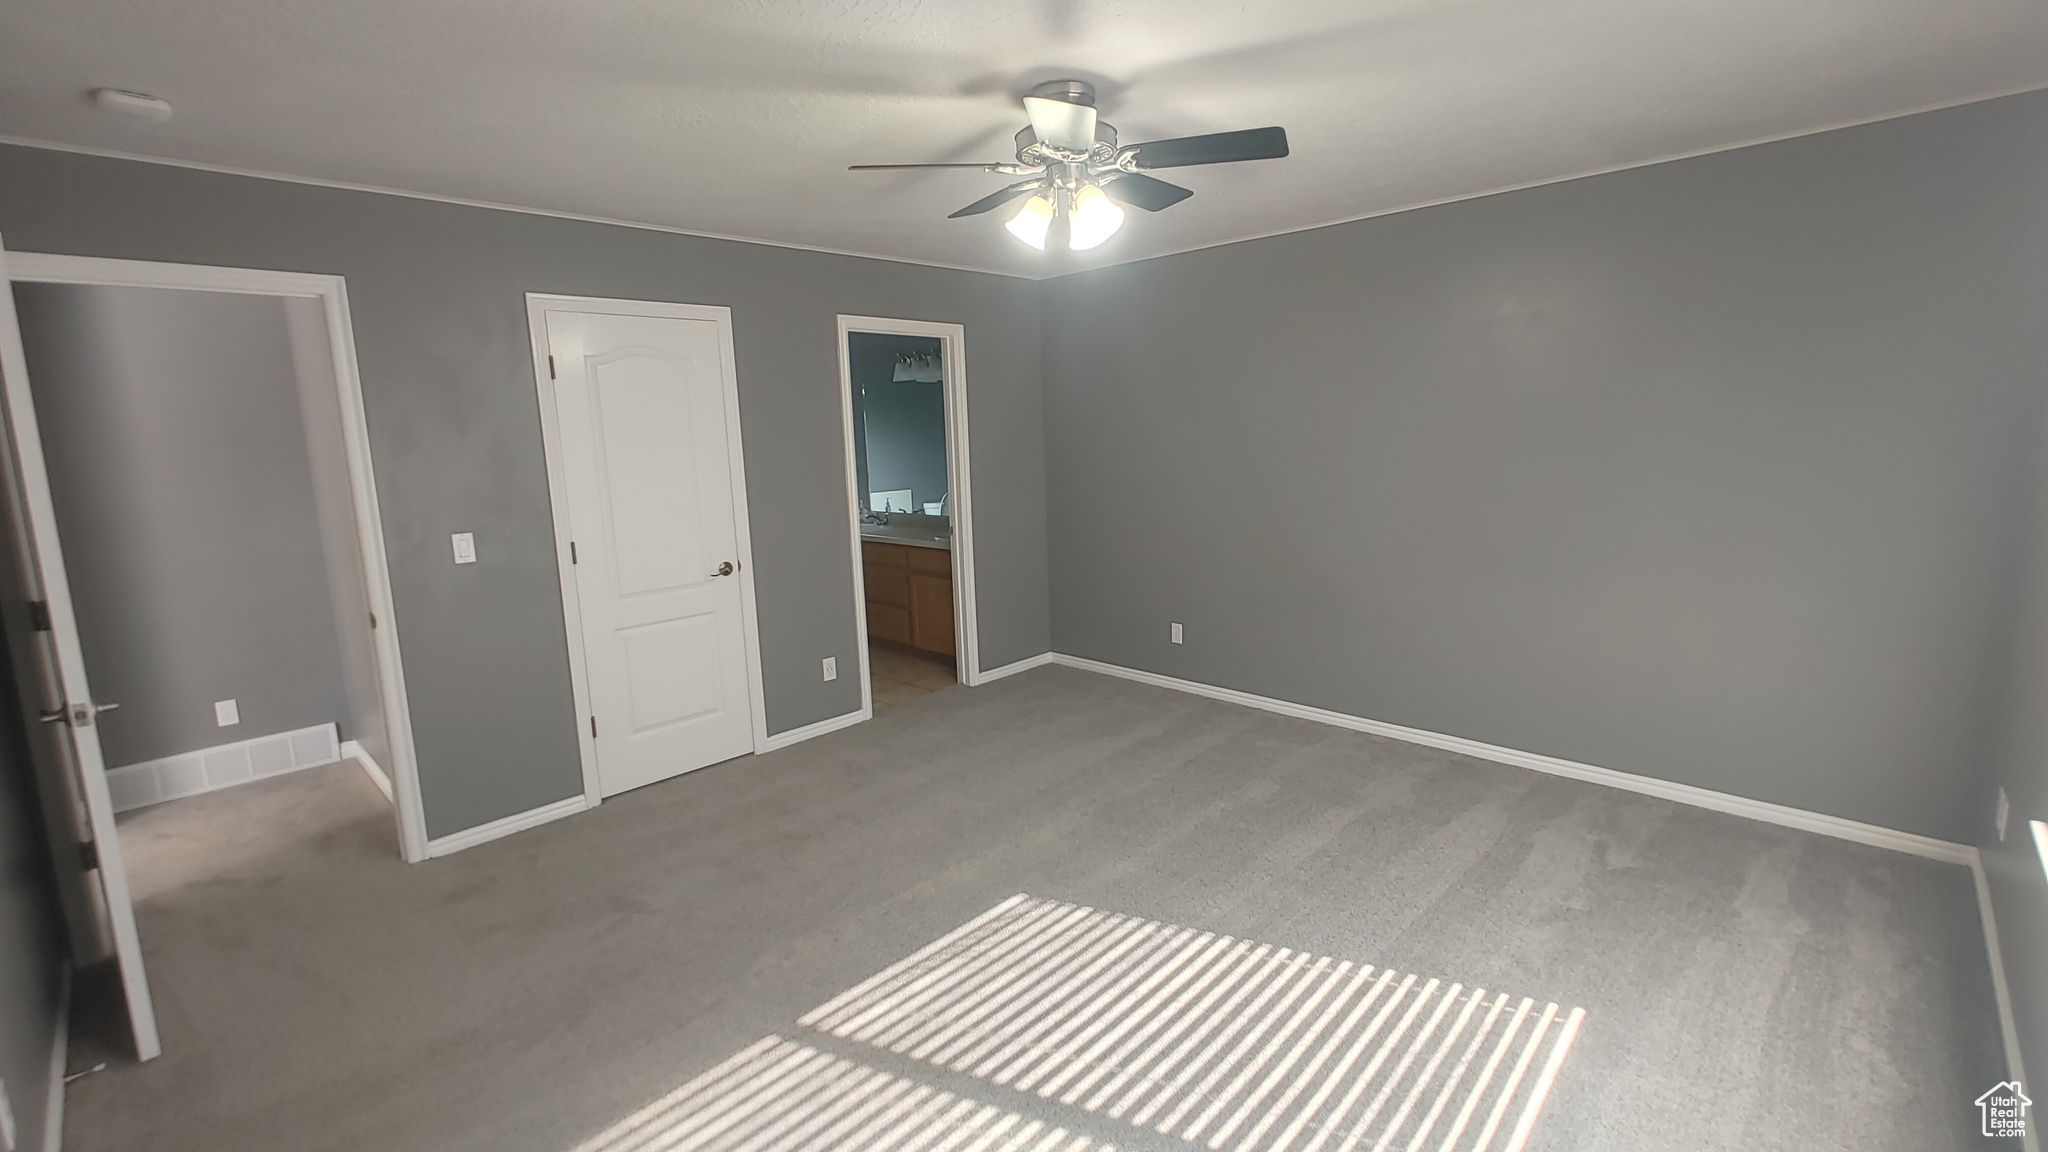 Unfurnished bedroom with dark carpet, ceiling fan, and ensuite bathroom